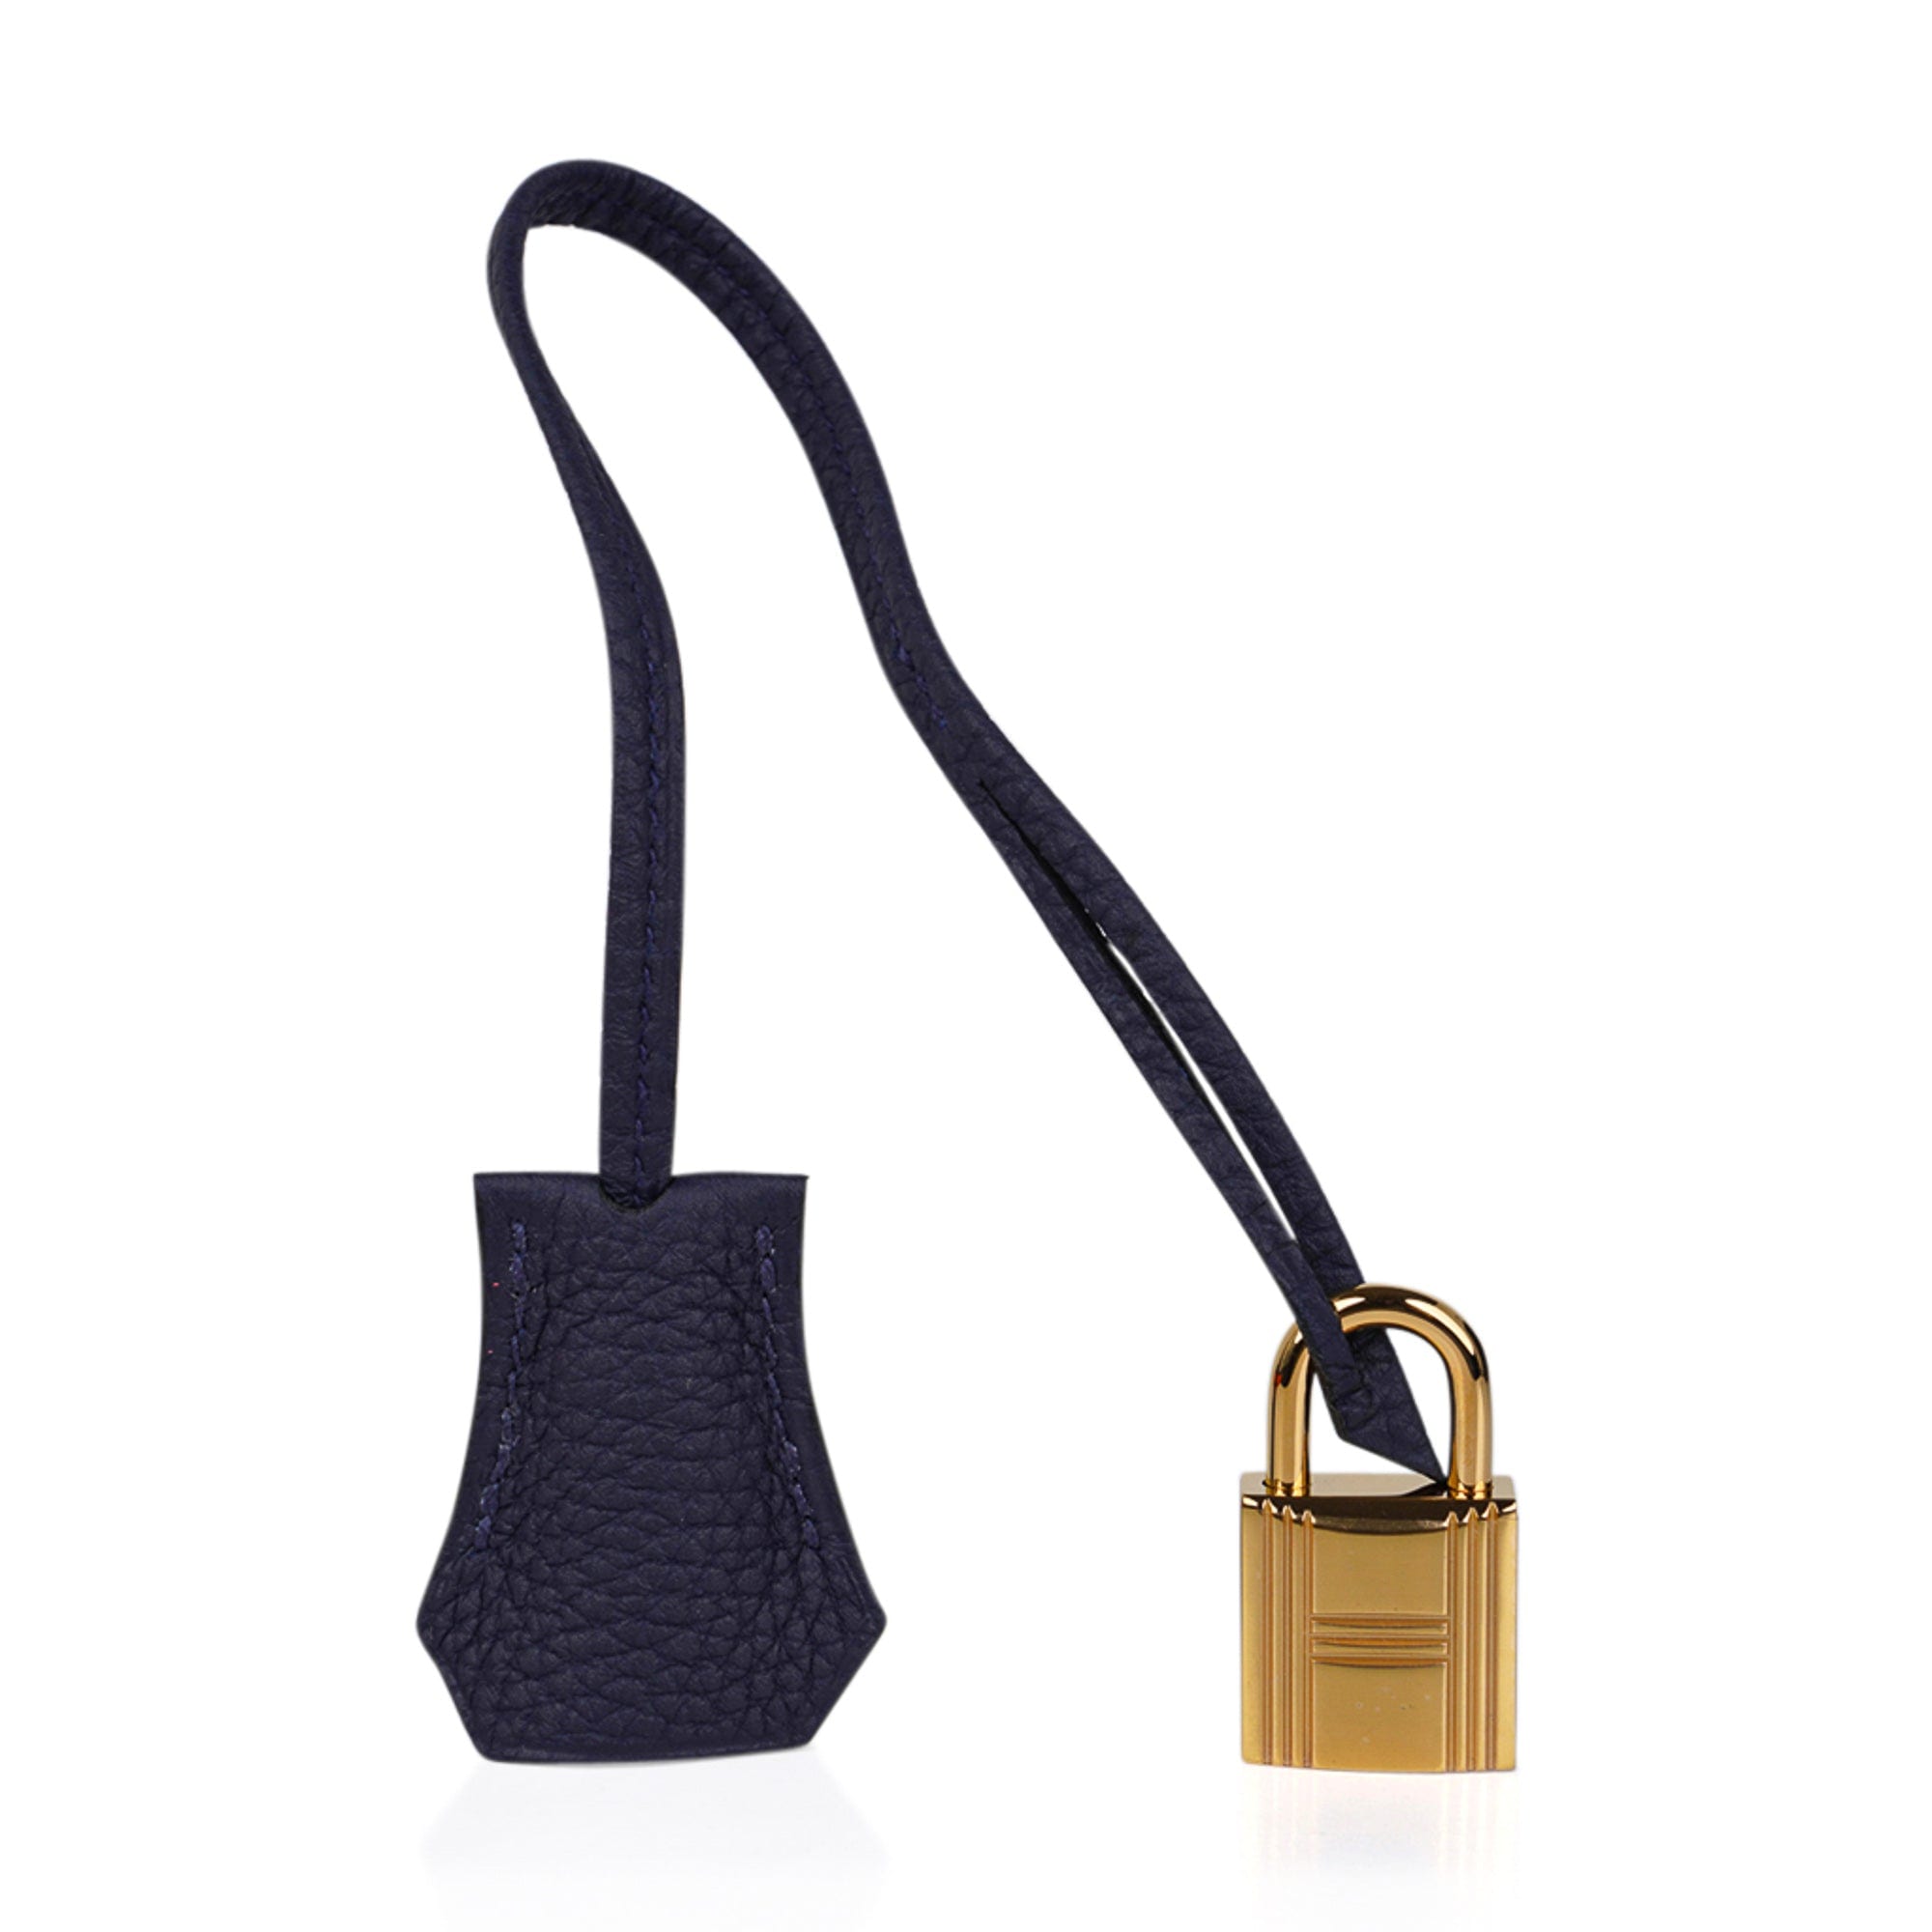 Hermès Birkin Ghillies Handbag in Blue Togo Leather and Blue Swift